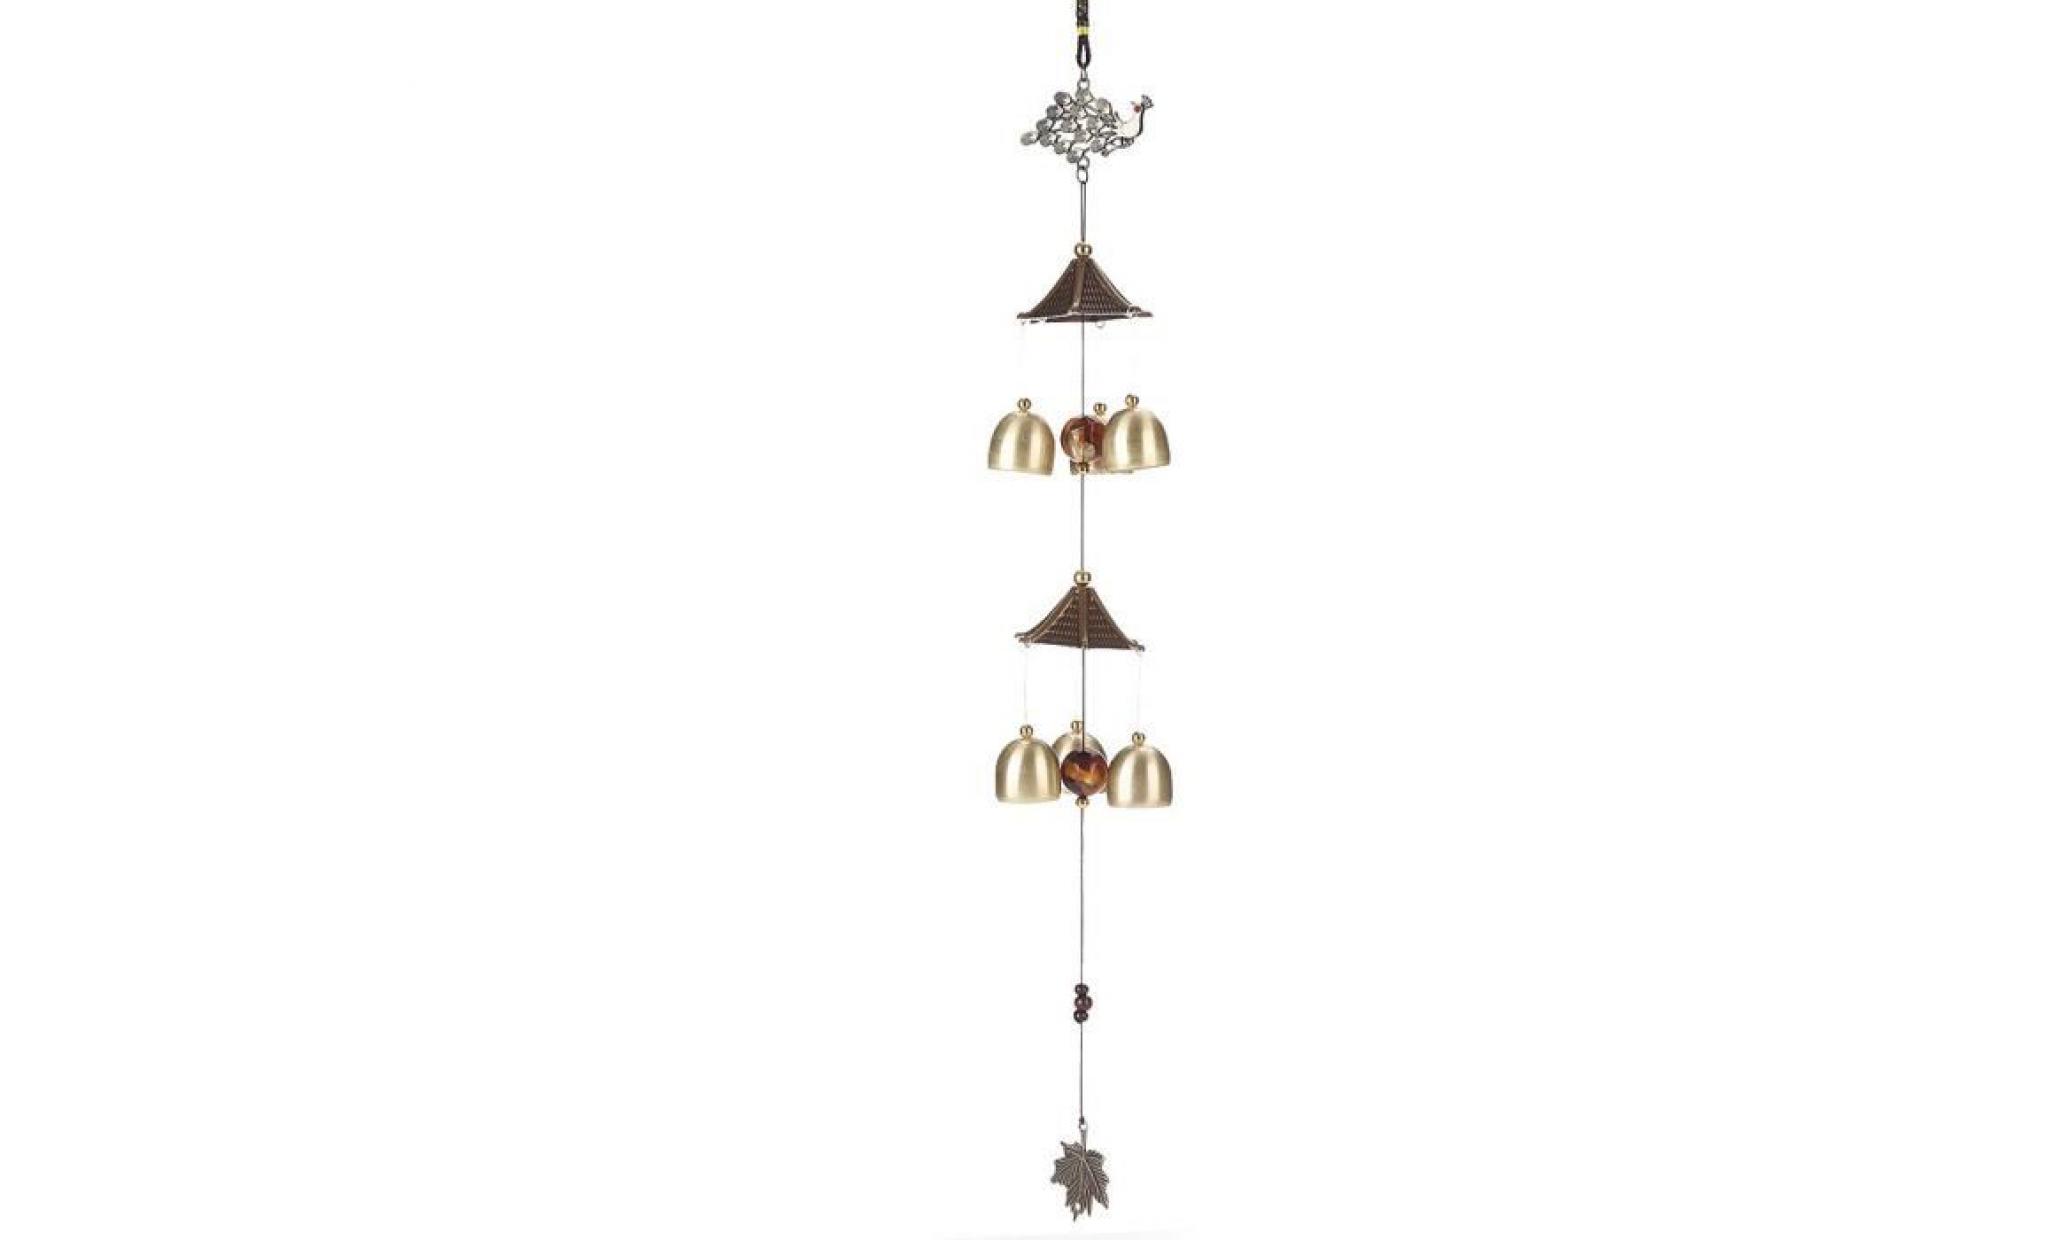 amazing carillon grace collection grand son couleur bronze cloches vent carillons   cff70326401c